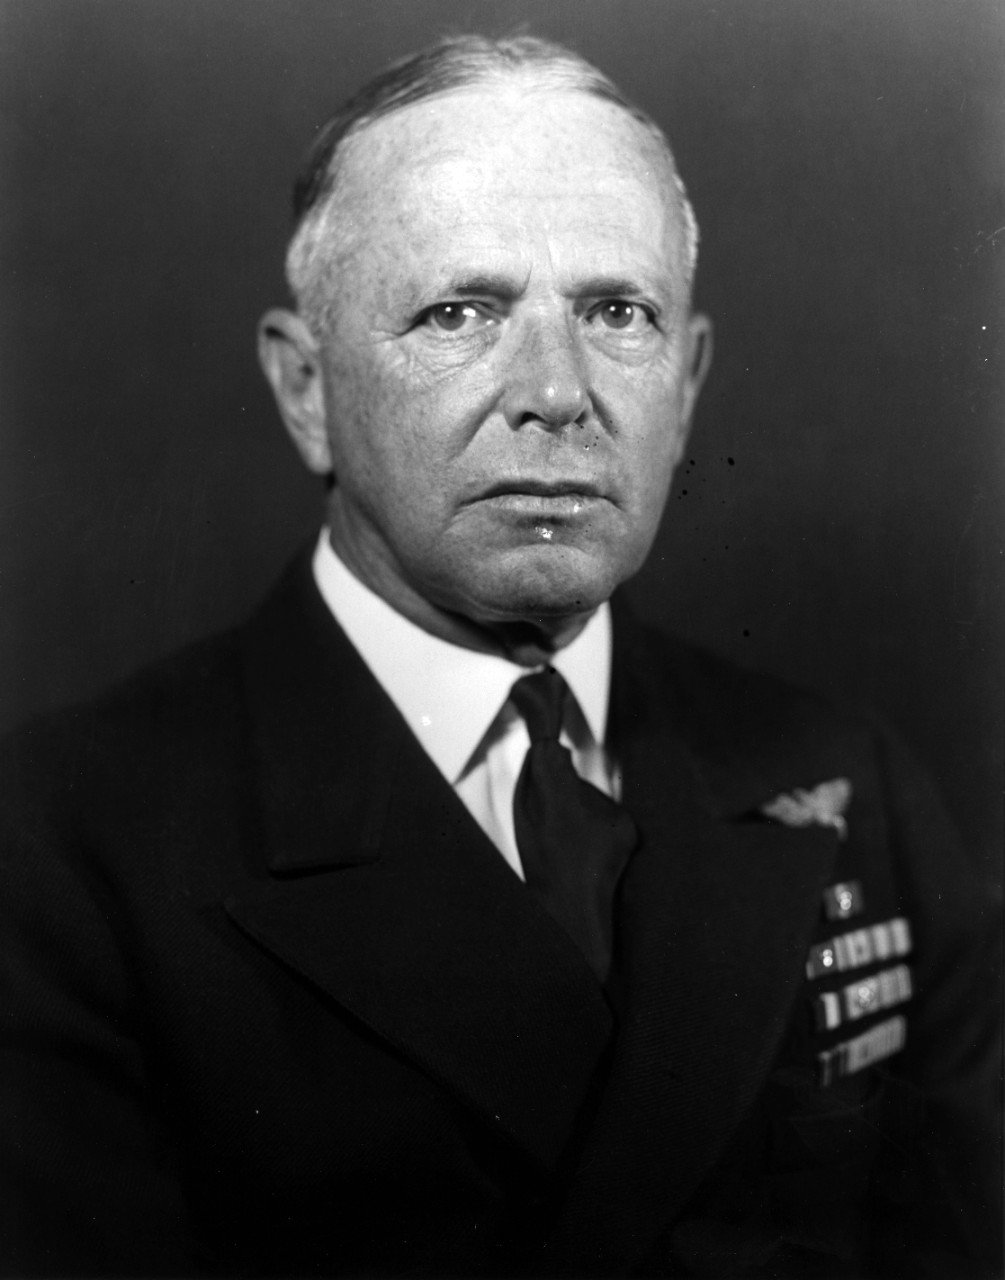 Rear Admiral John W. Reeves, Jr.